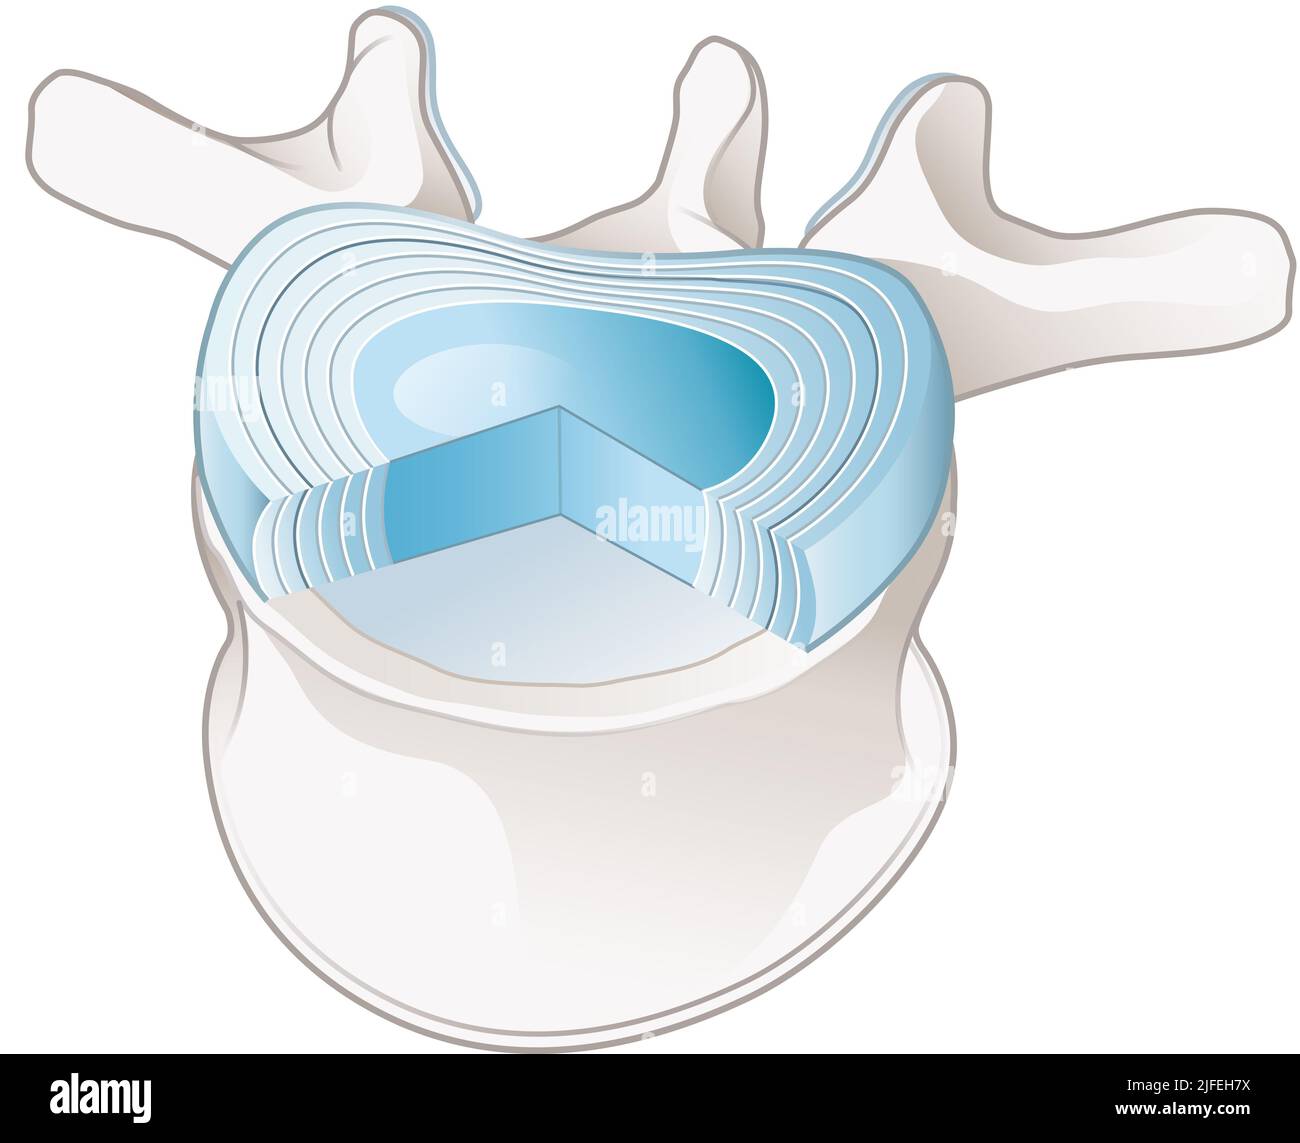 Illustration showing healthy lumbar vertebrae and intervertebral disc. Labeled illustration Stock Photo